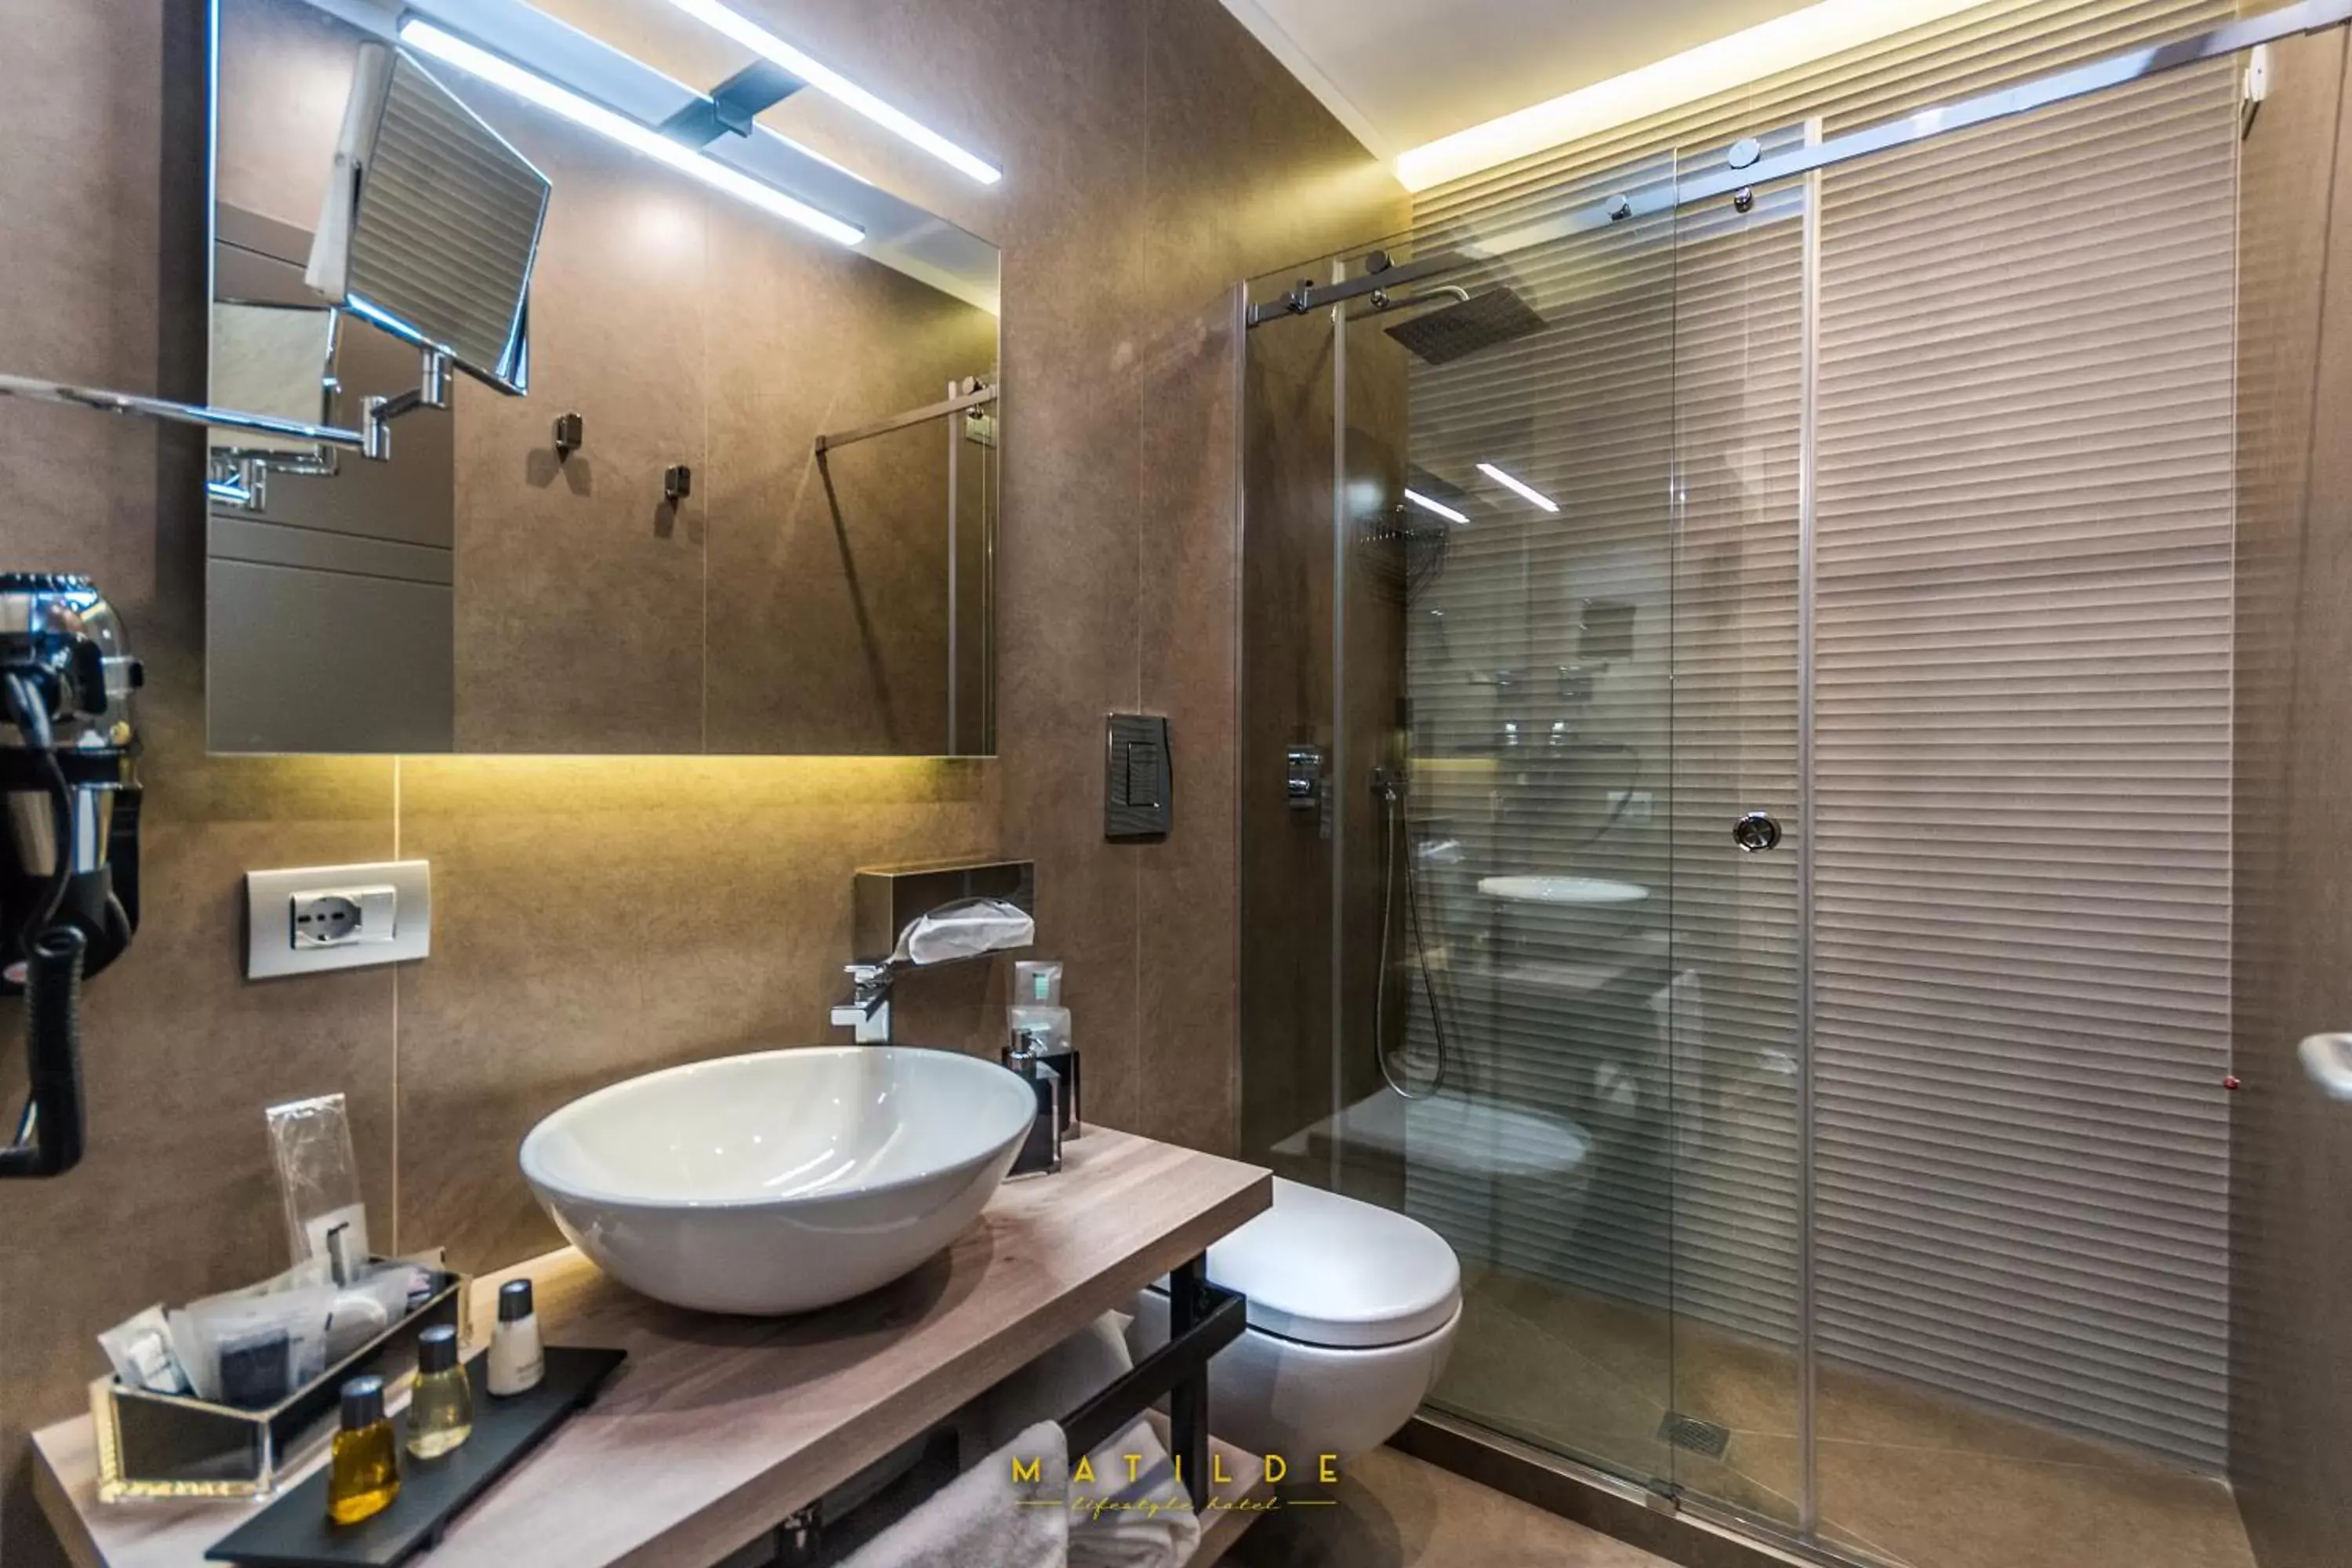 Bathroom in Hotel Matilde - Lifestyle Hotel